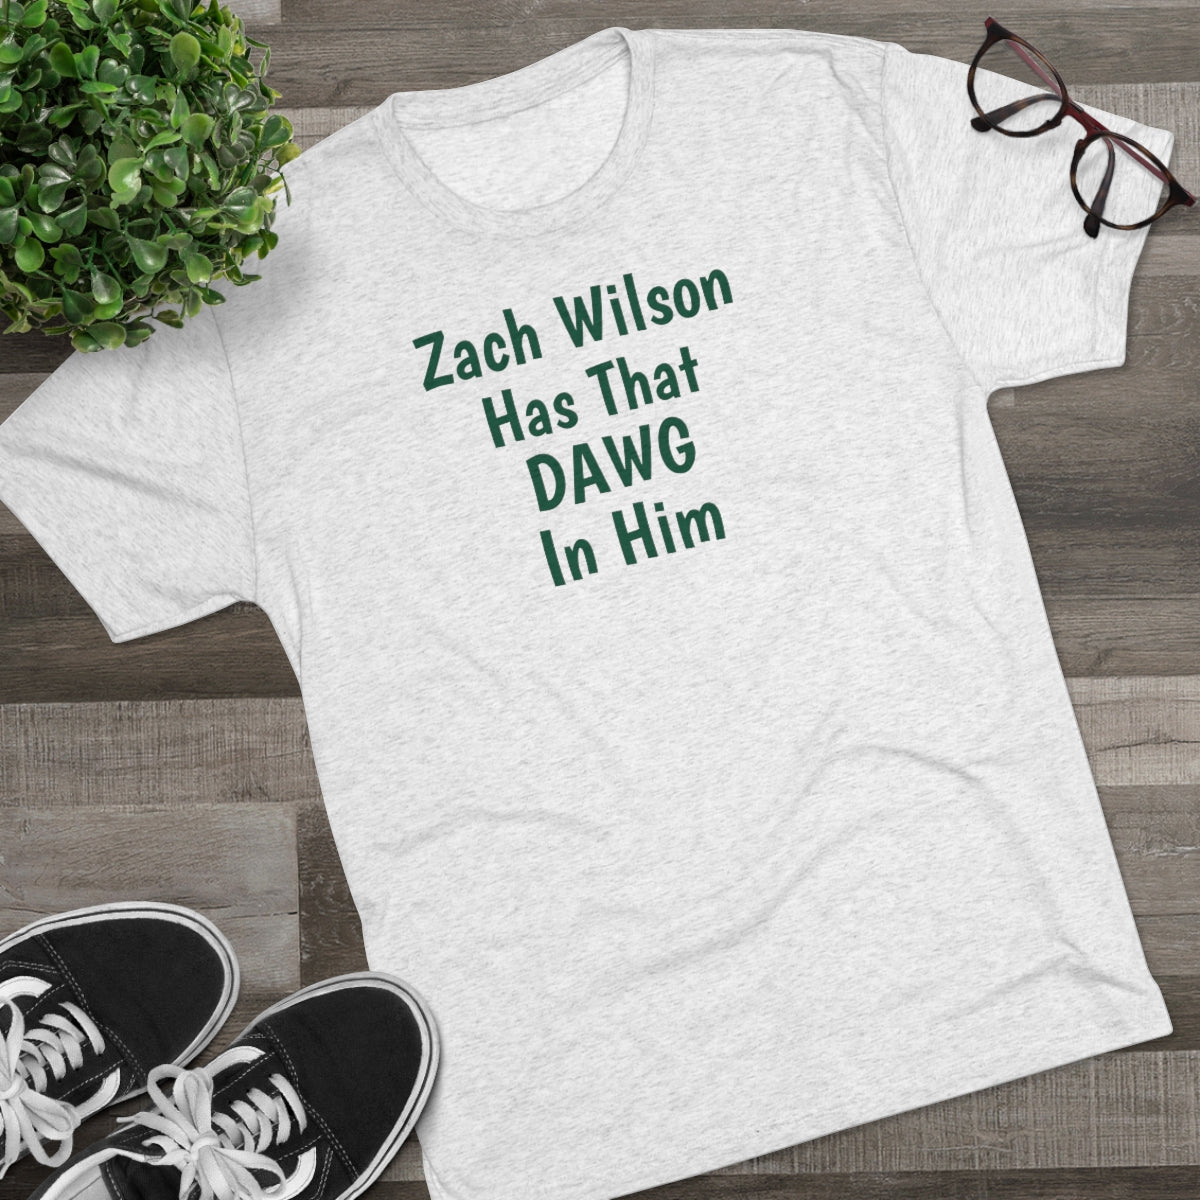 Zach Wilson Has That DAWG In Him Shirt - IsGoodBrand